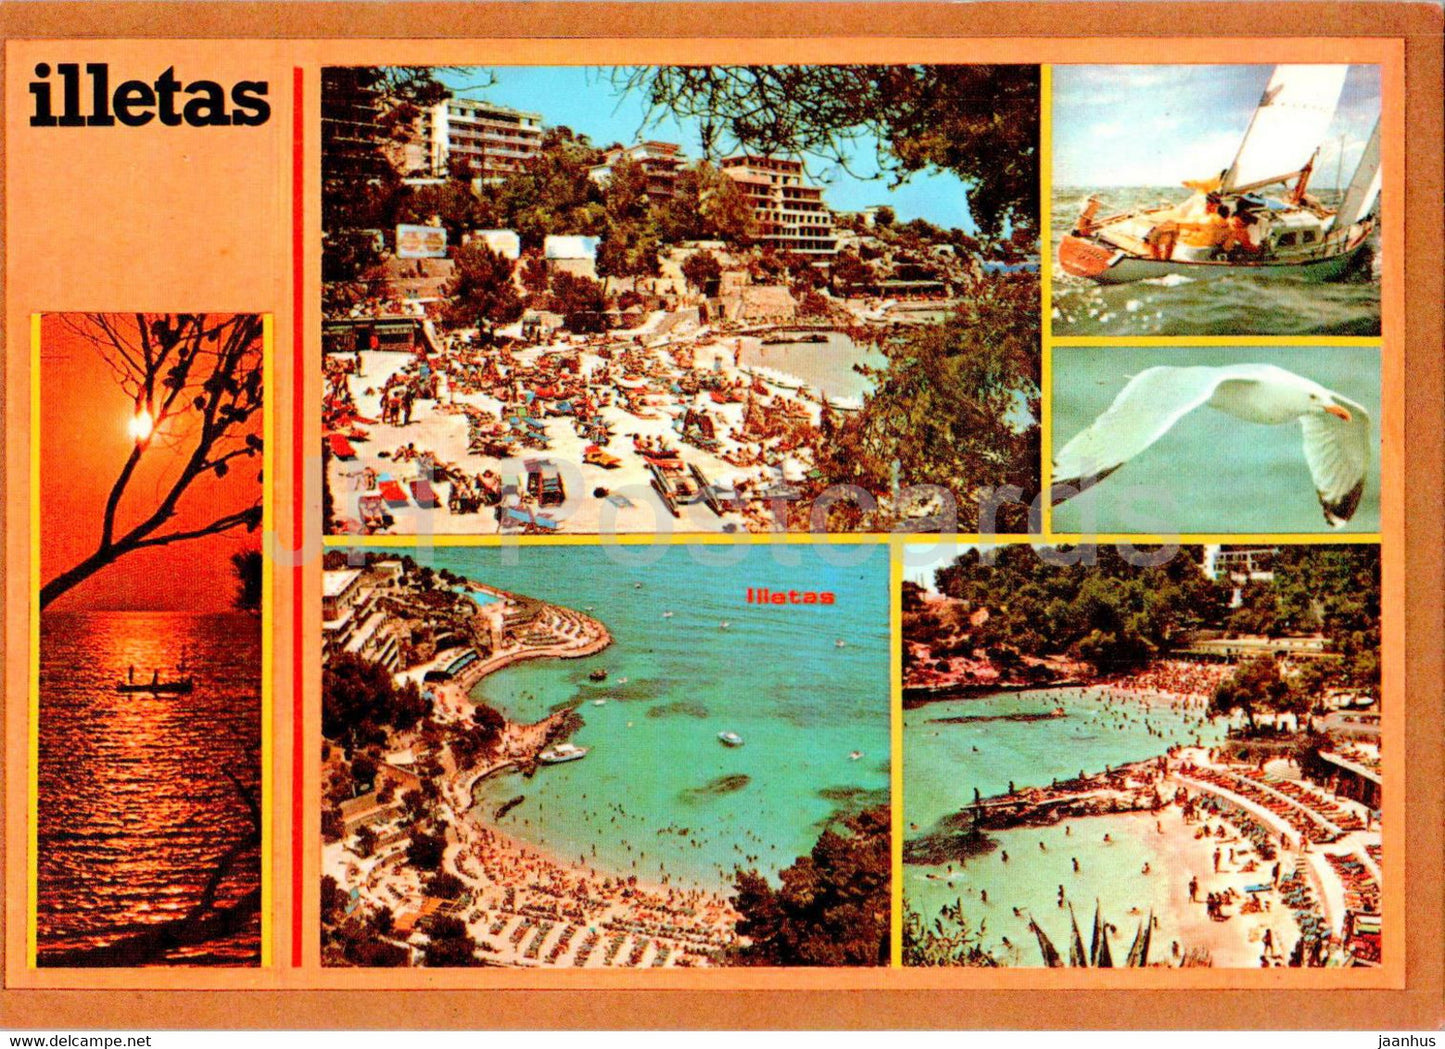 Illetas - Mallorca - multiview - 2008 - Spain - unused - JH Postcards